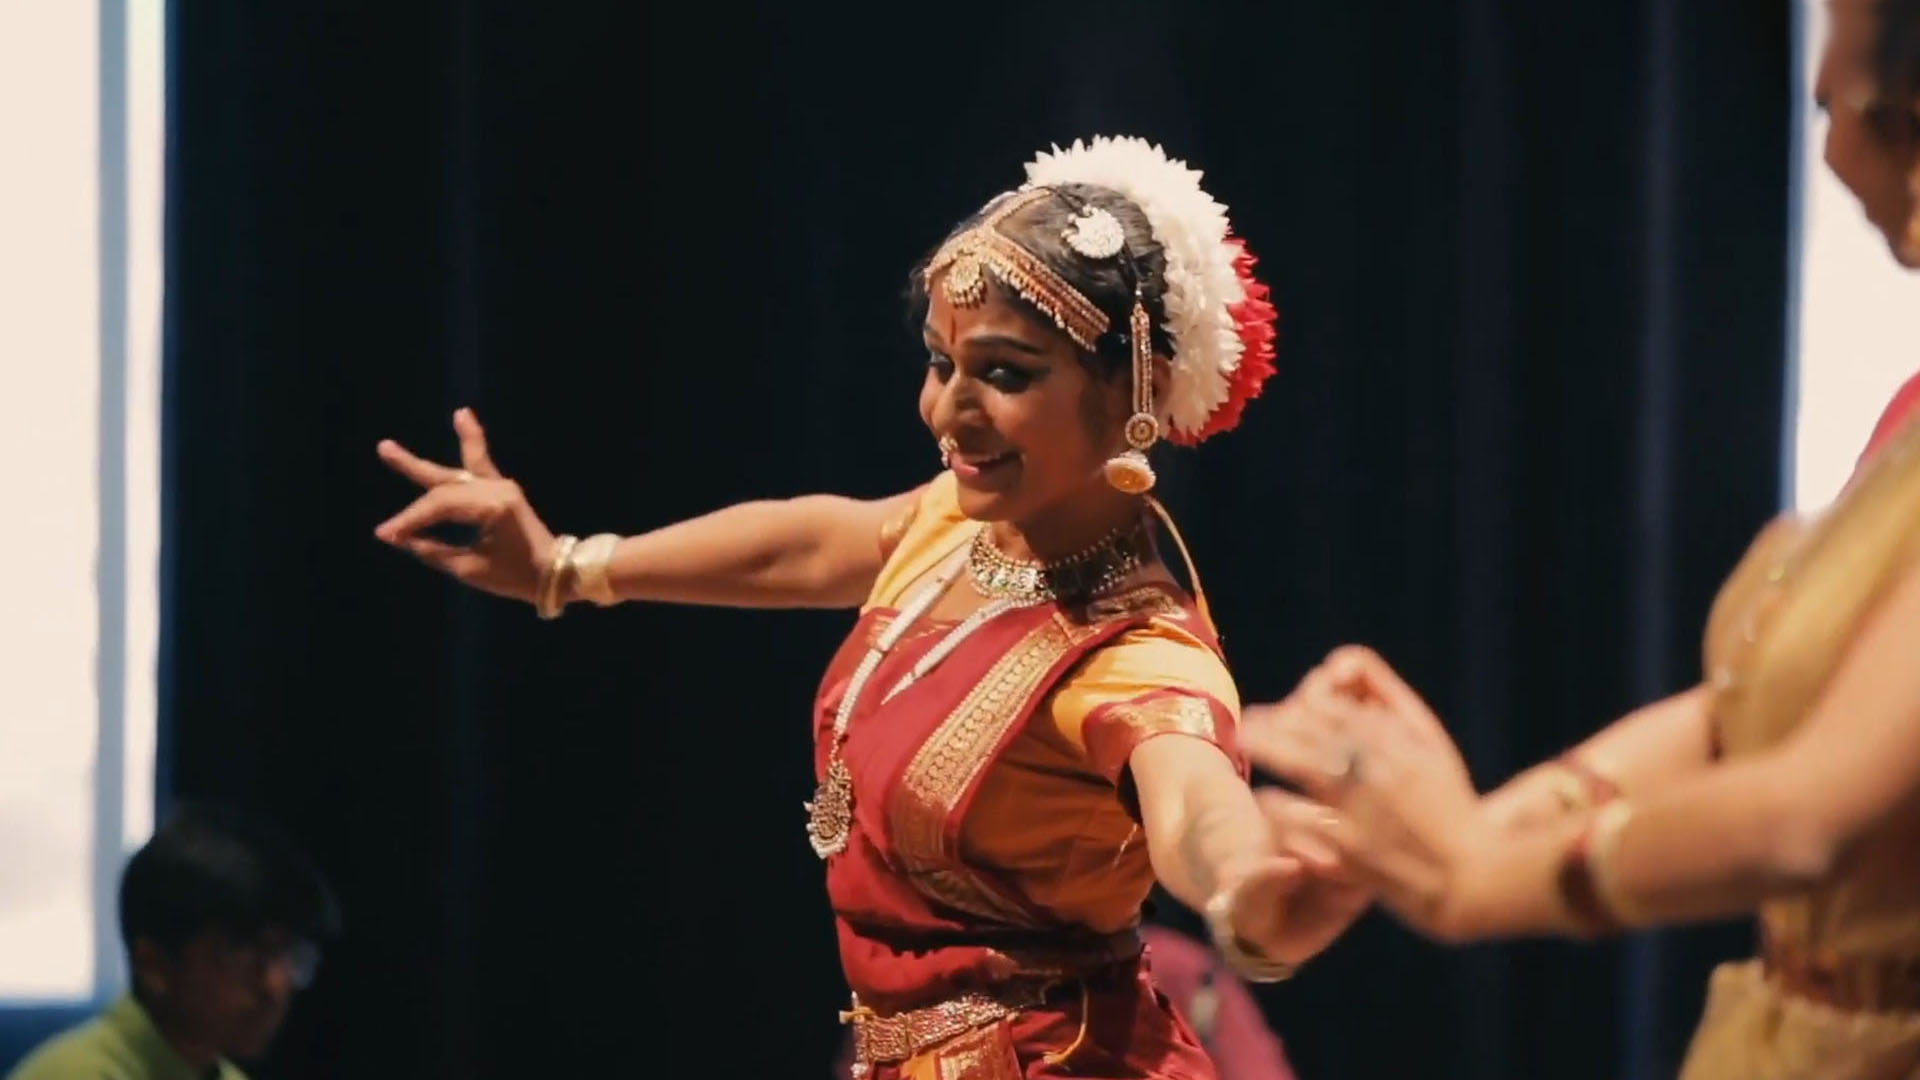 Bharatanatyam Dance Photograph by Vijayan Madhavan - Pixels